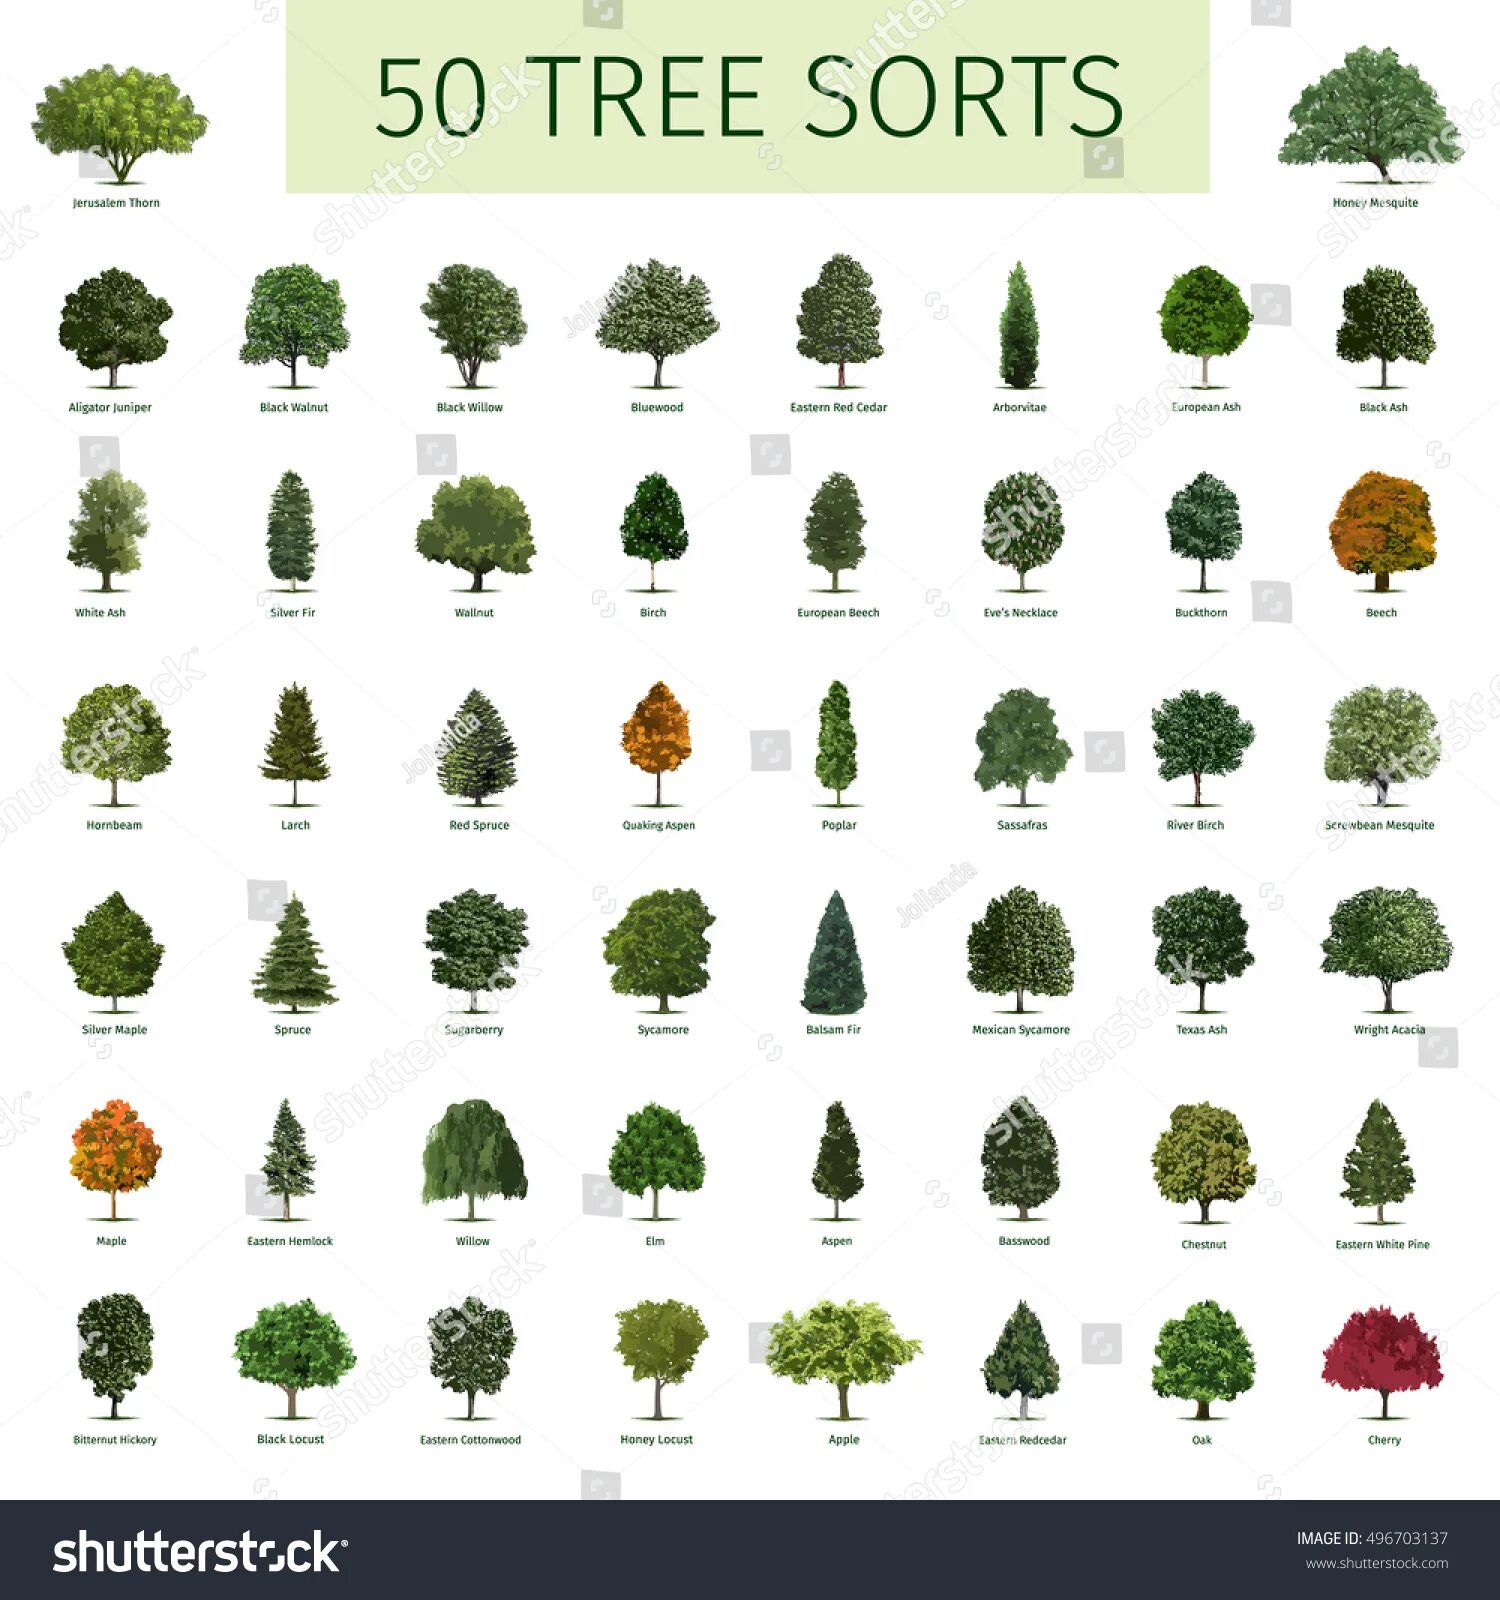 Деревья на английском. Виды деревьев на английском. Names of Trees in English. Куст на англ. Kinds of trees